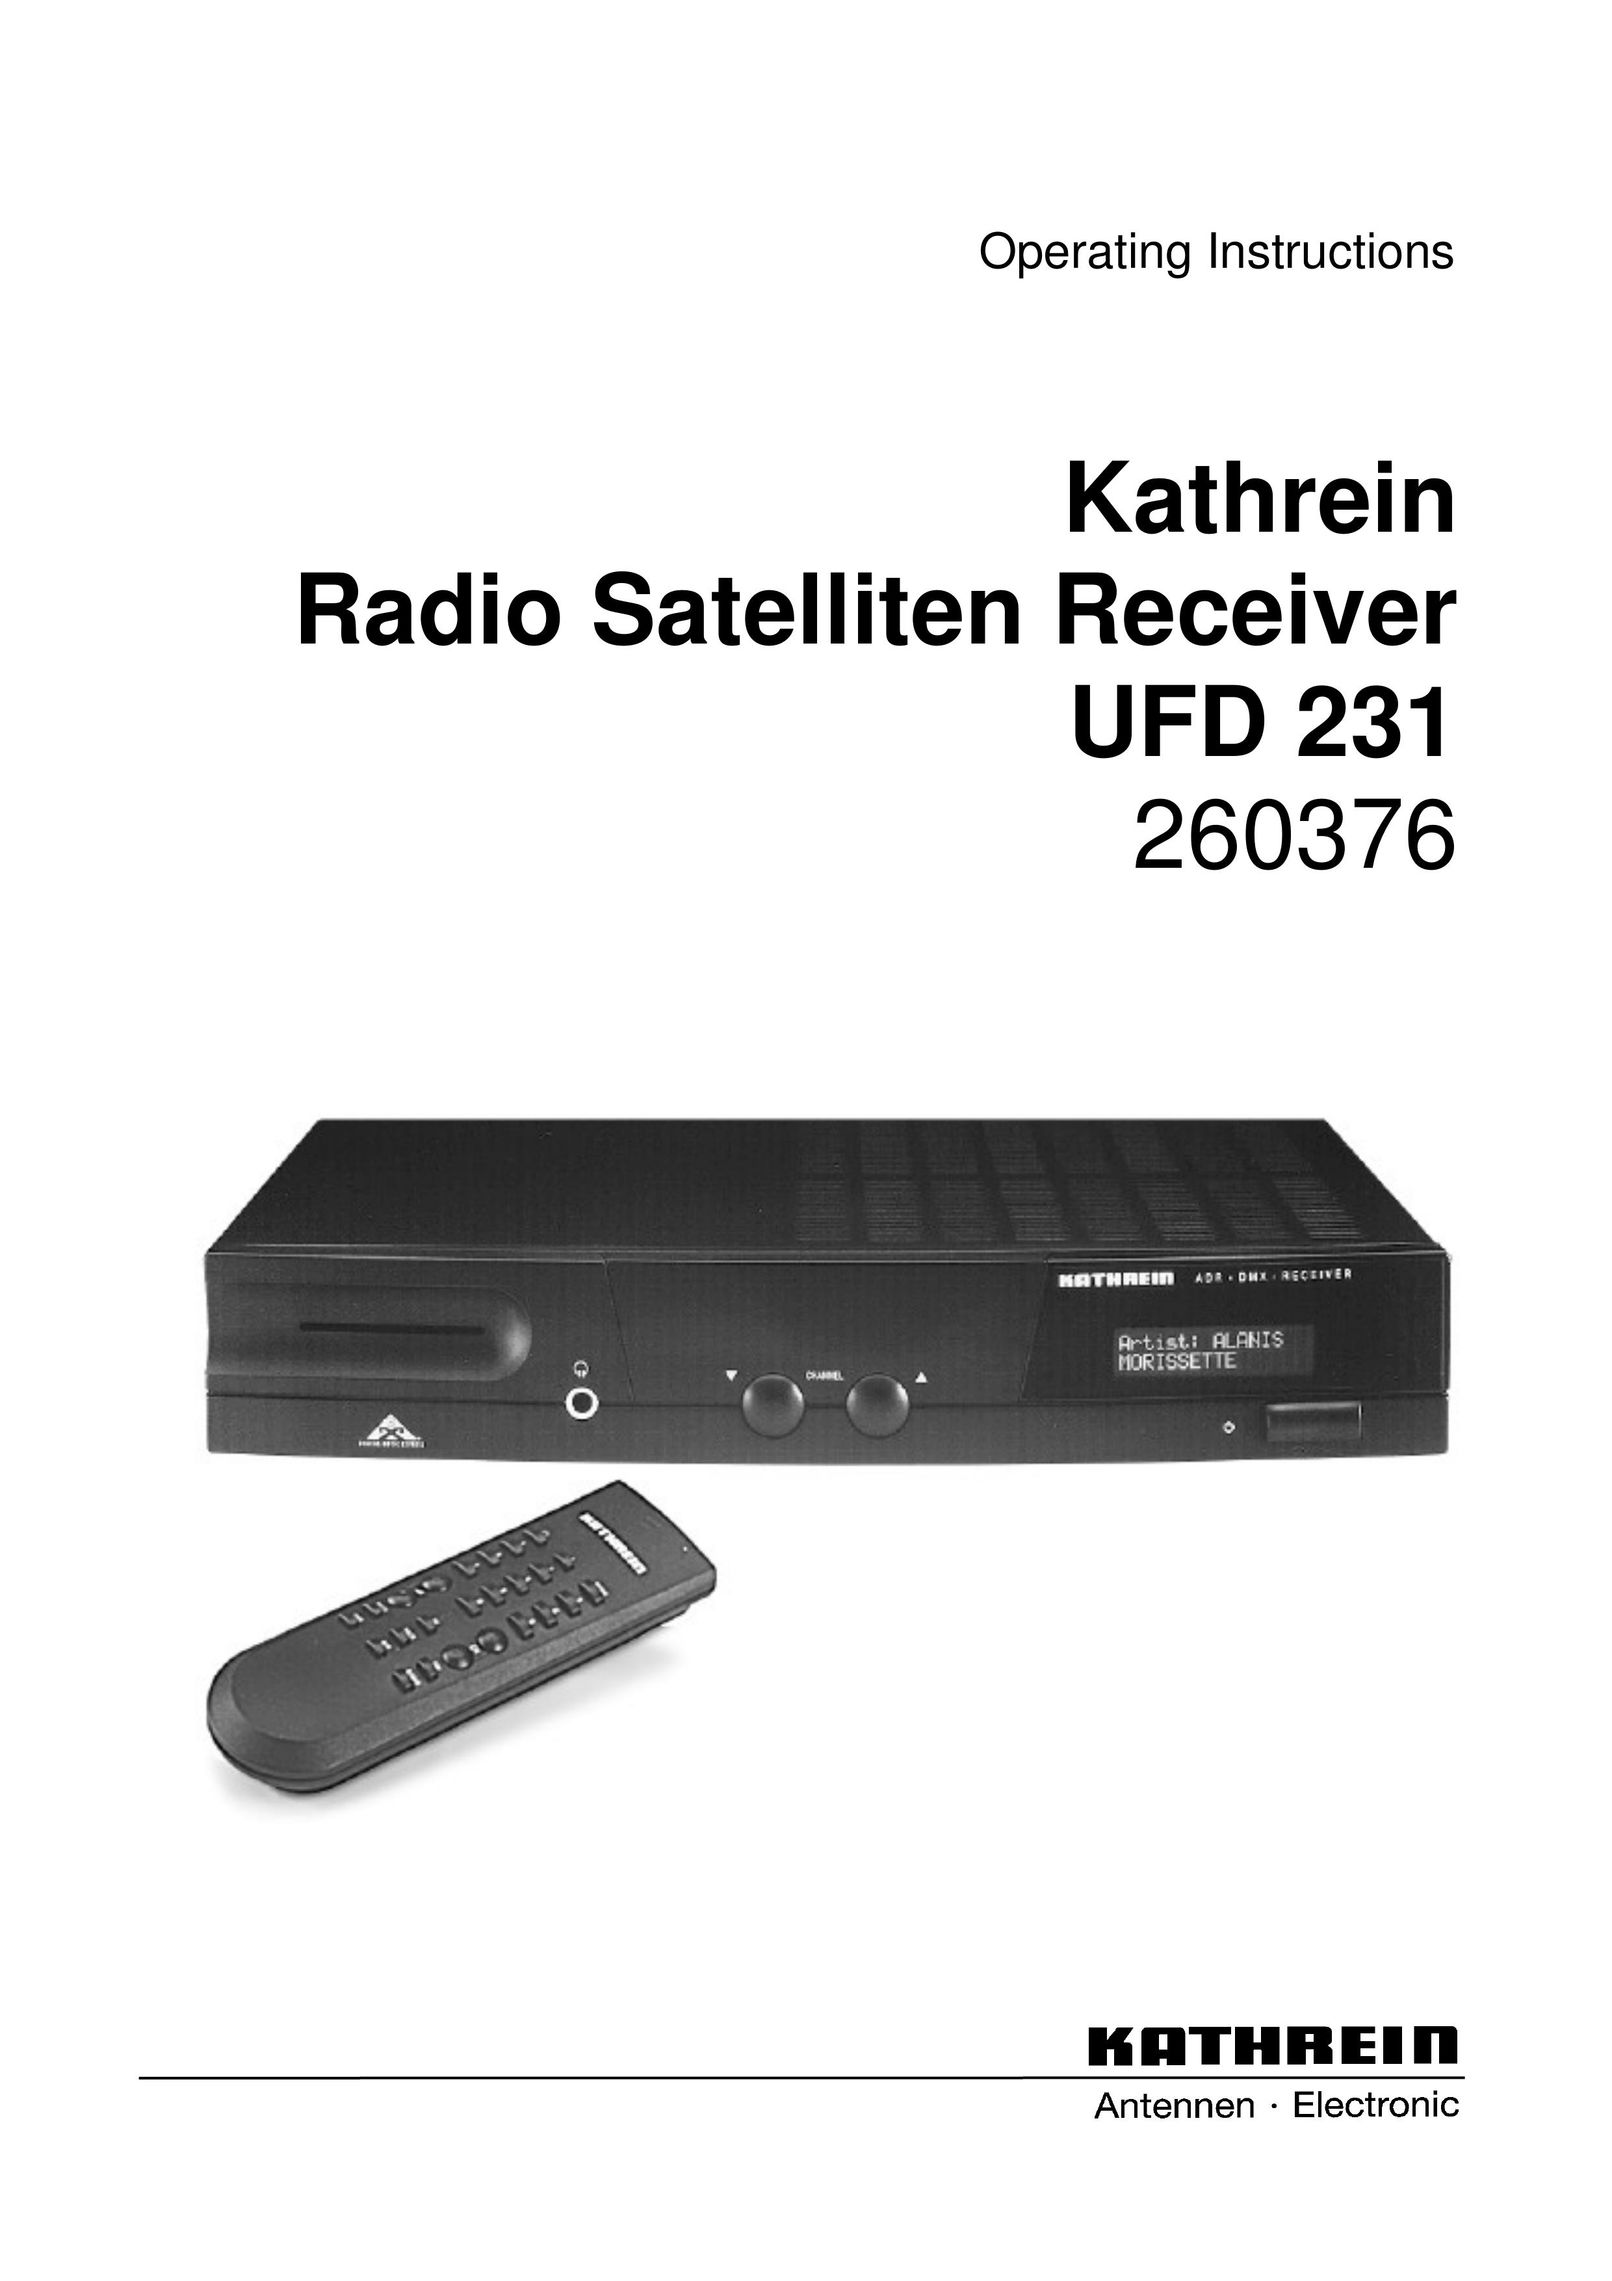 Kathrein 260376 Satellite Radio User Manual